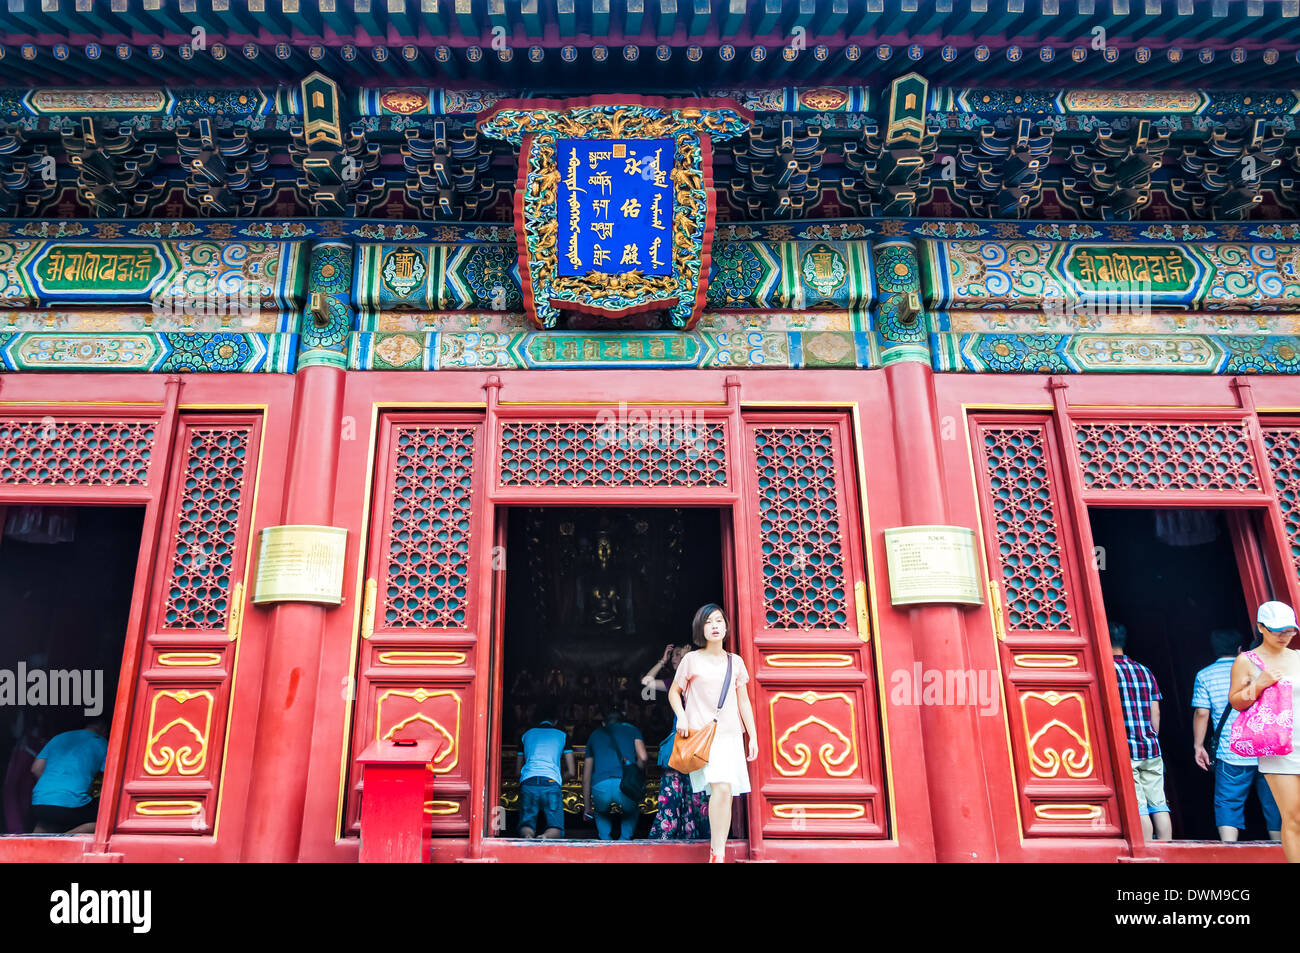 L'architecture traditionnelle chinoise au temple Yonghegong Lama à Beijing, Chine. Banque D'Images